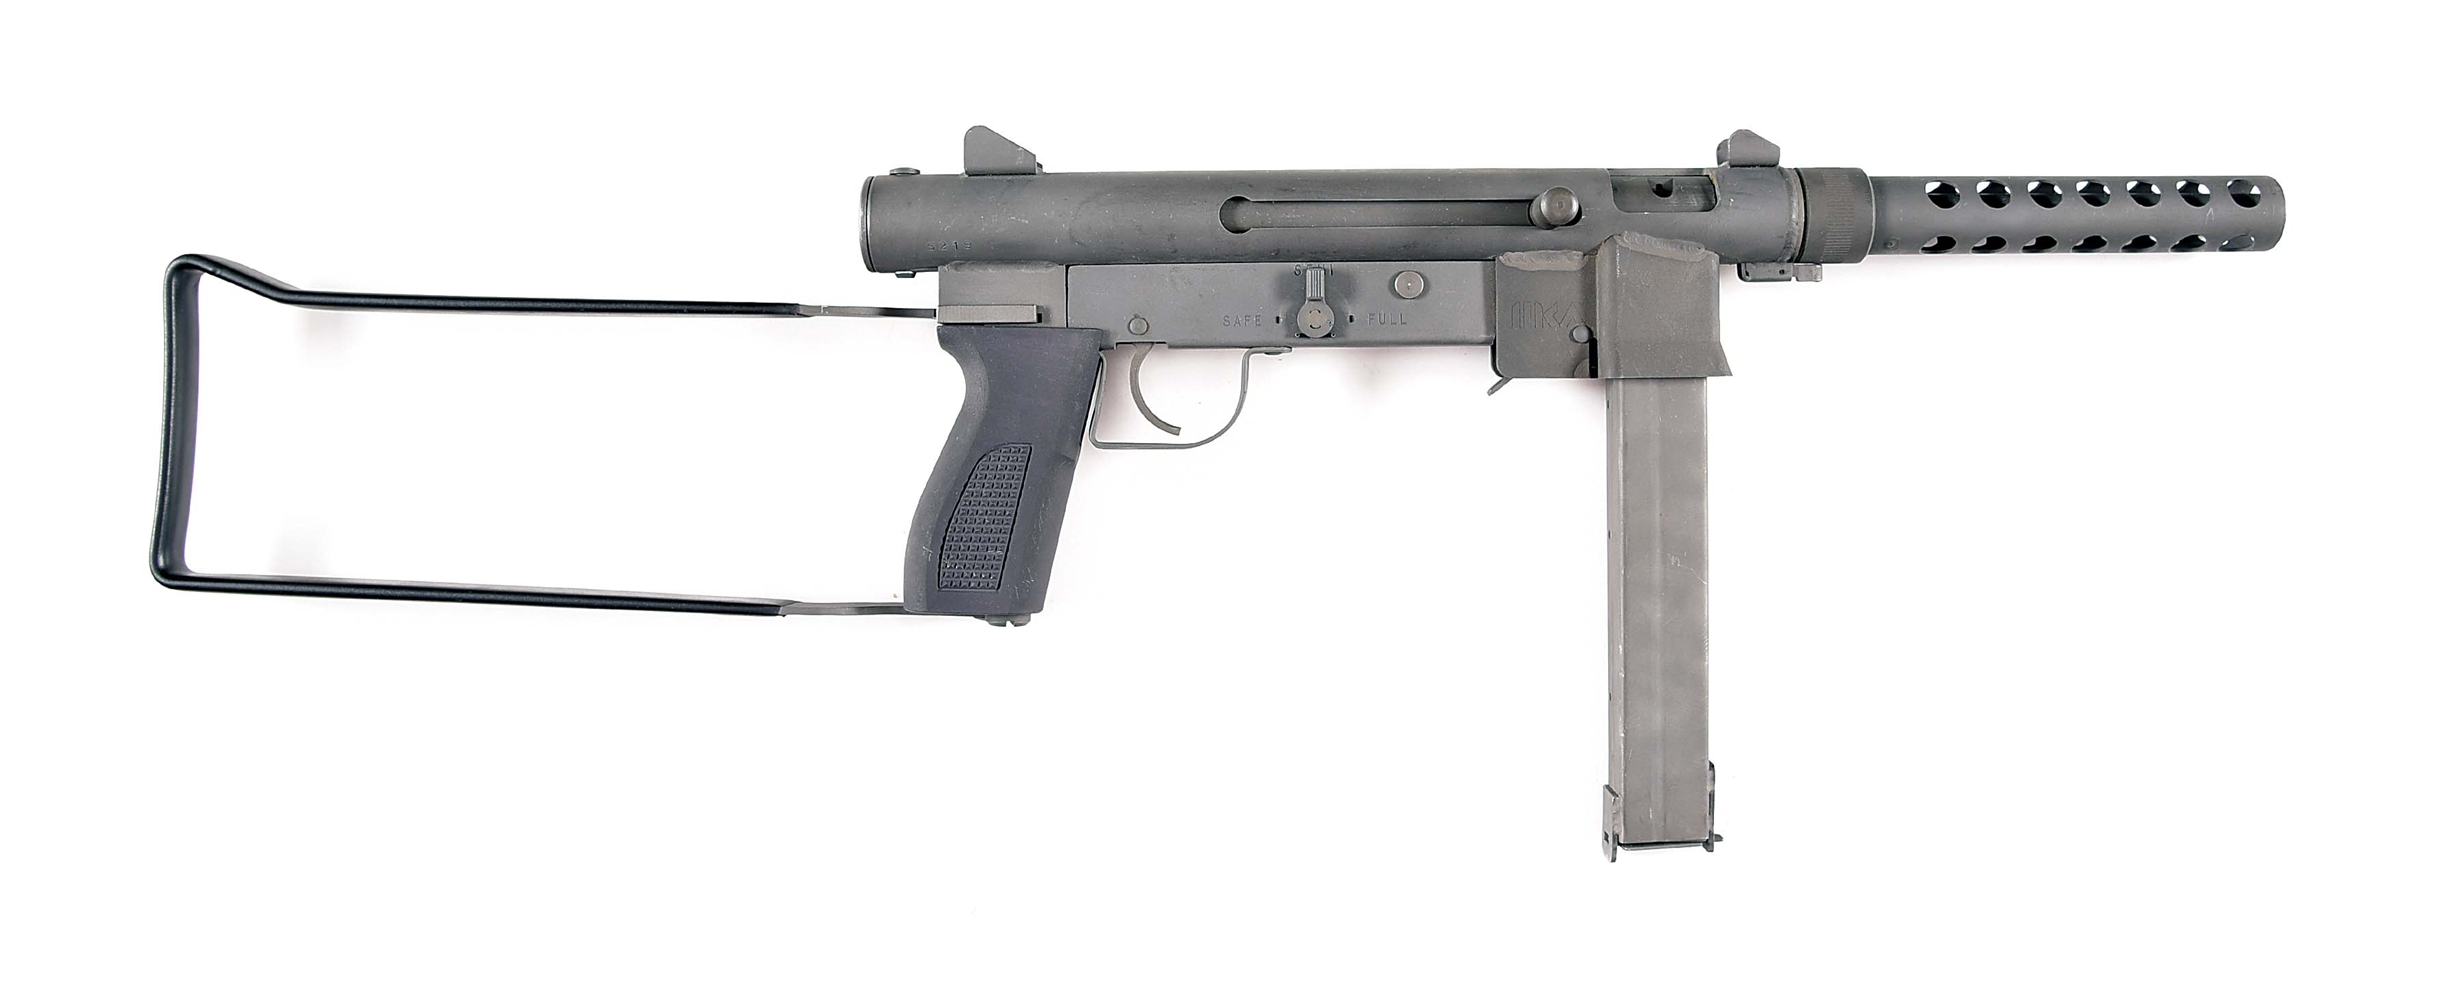 (N) MK ARMS MK-760 MACHINE GUN (FULLY TRANSFERABLE).